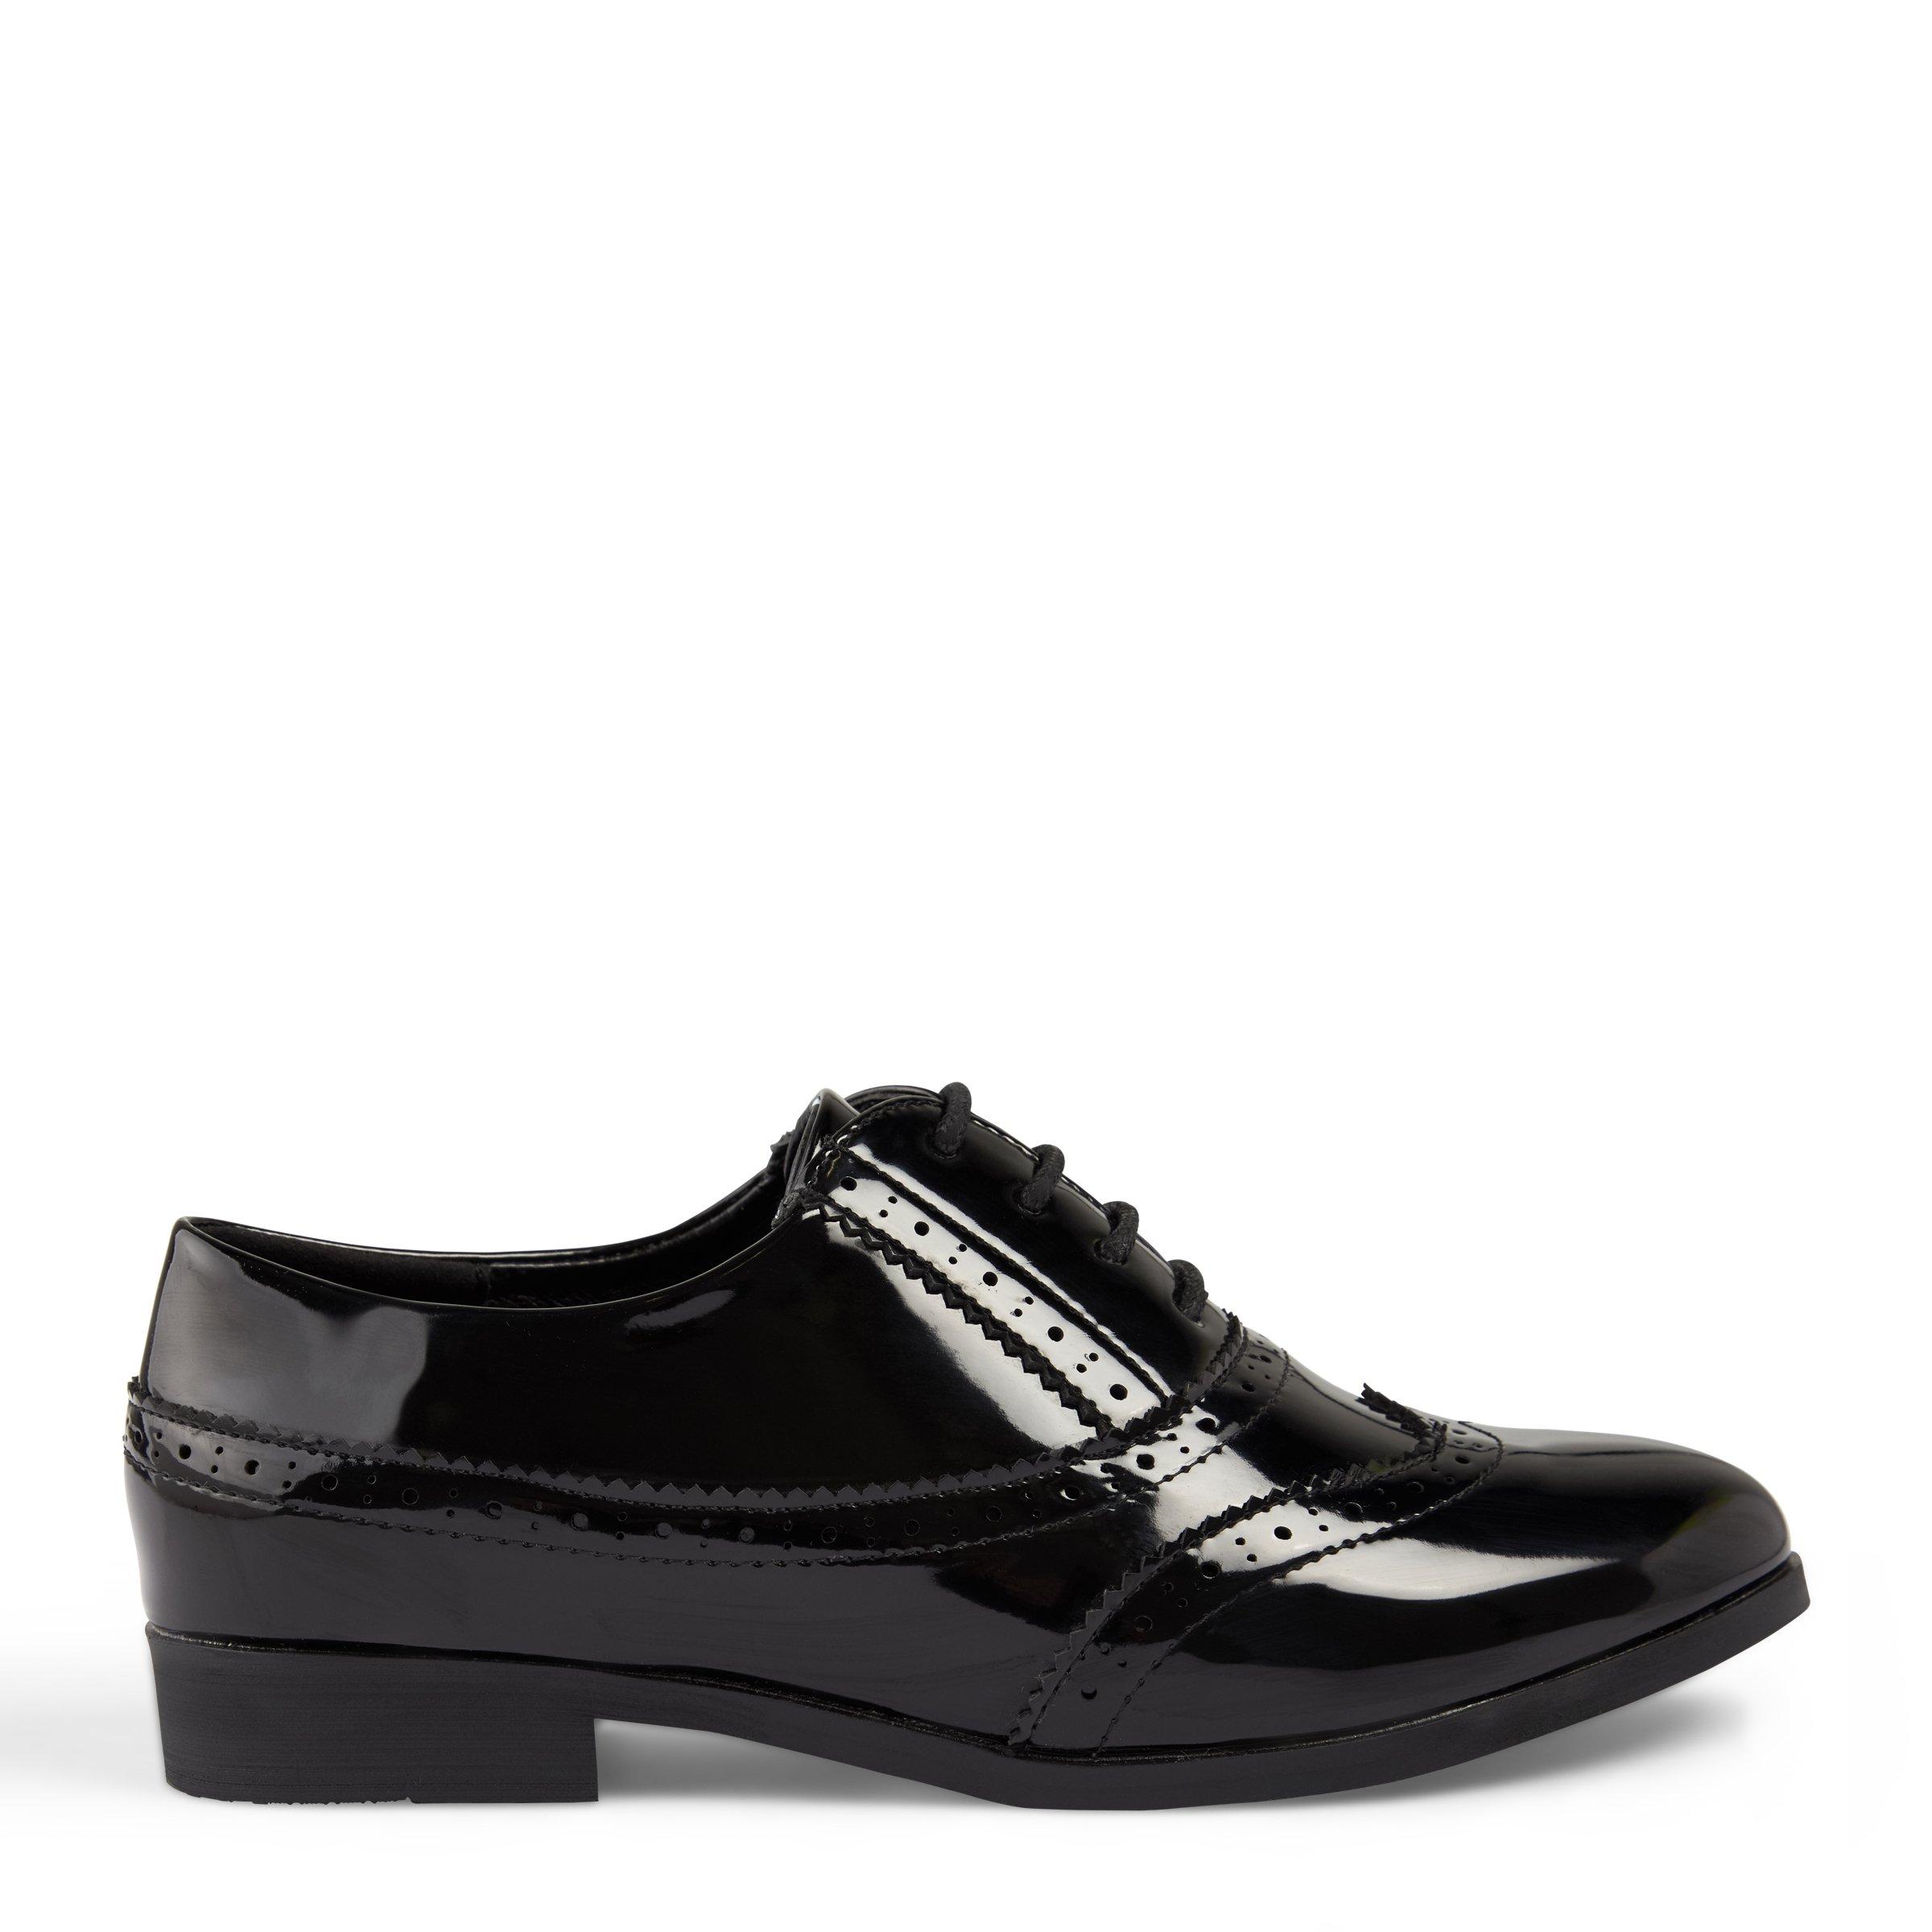 Buy Truworths Black Oxford Shoe Online | Truworths